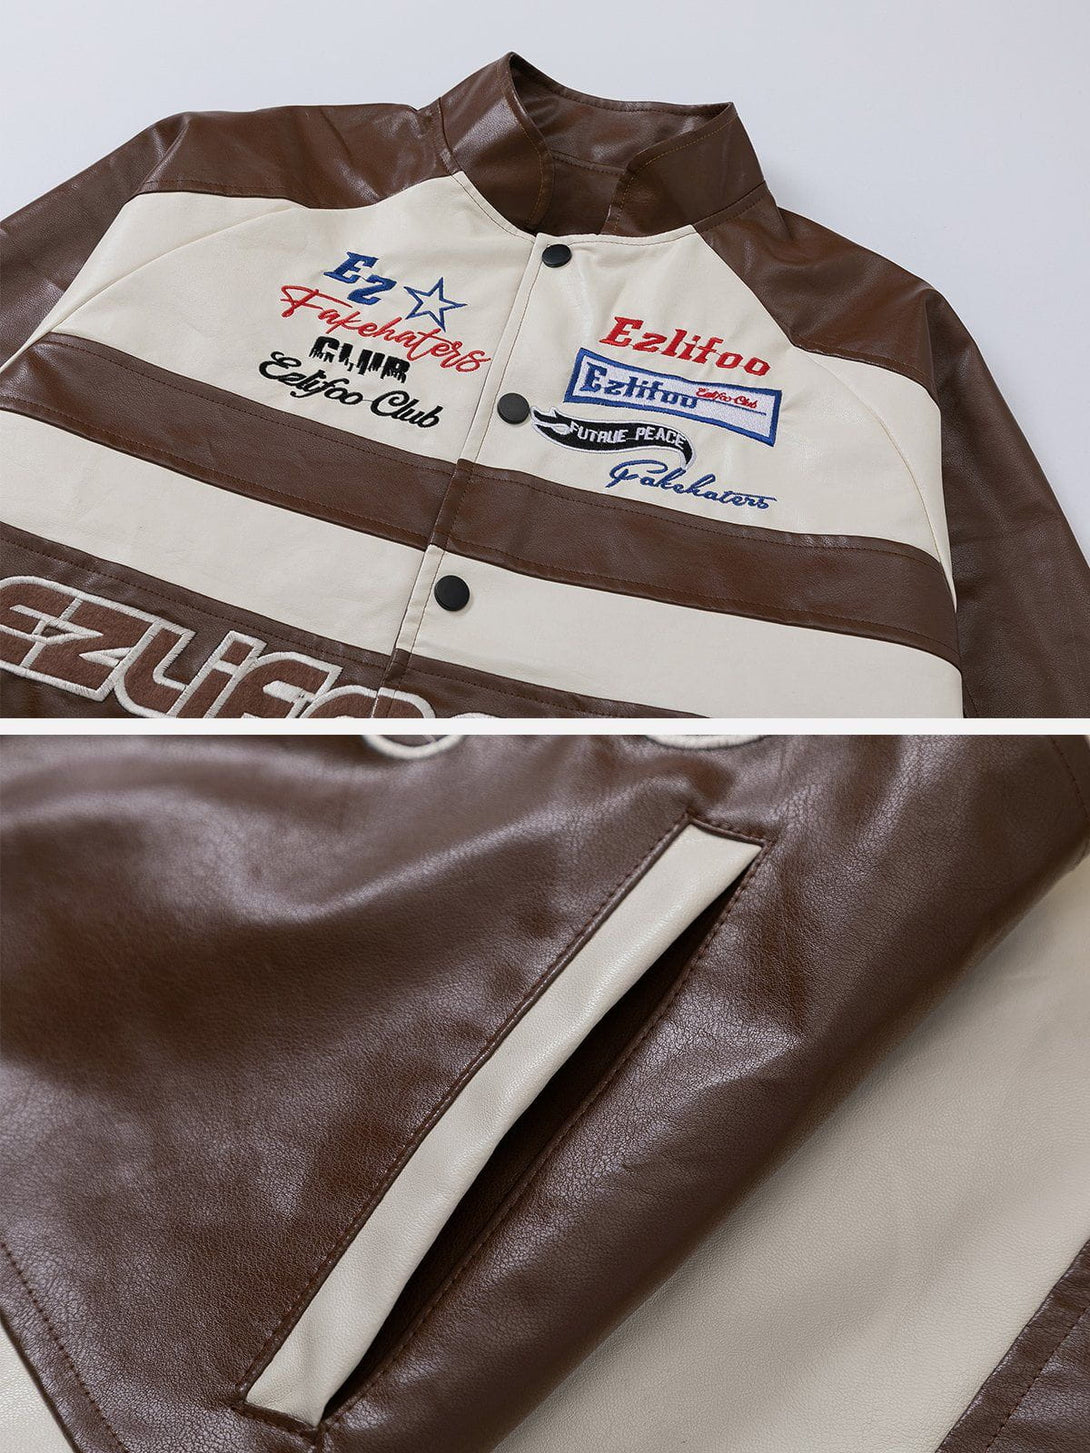 Majesda® - Embroidery Letter Racing PU Jacket outfit ideas, streetwear fashion - majesda.com